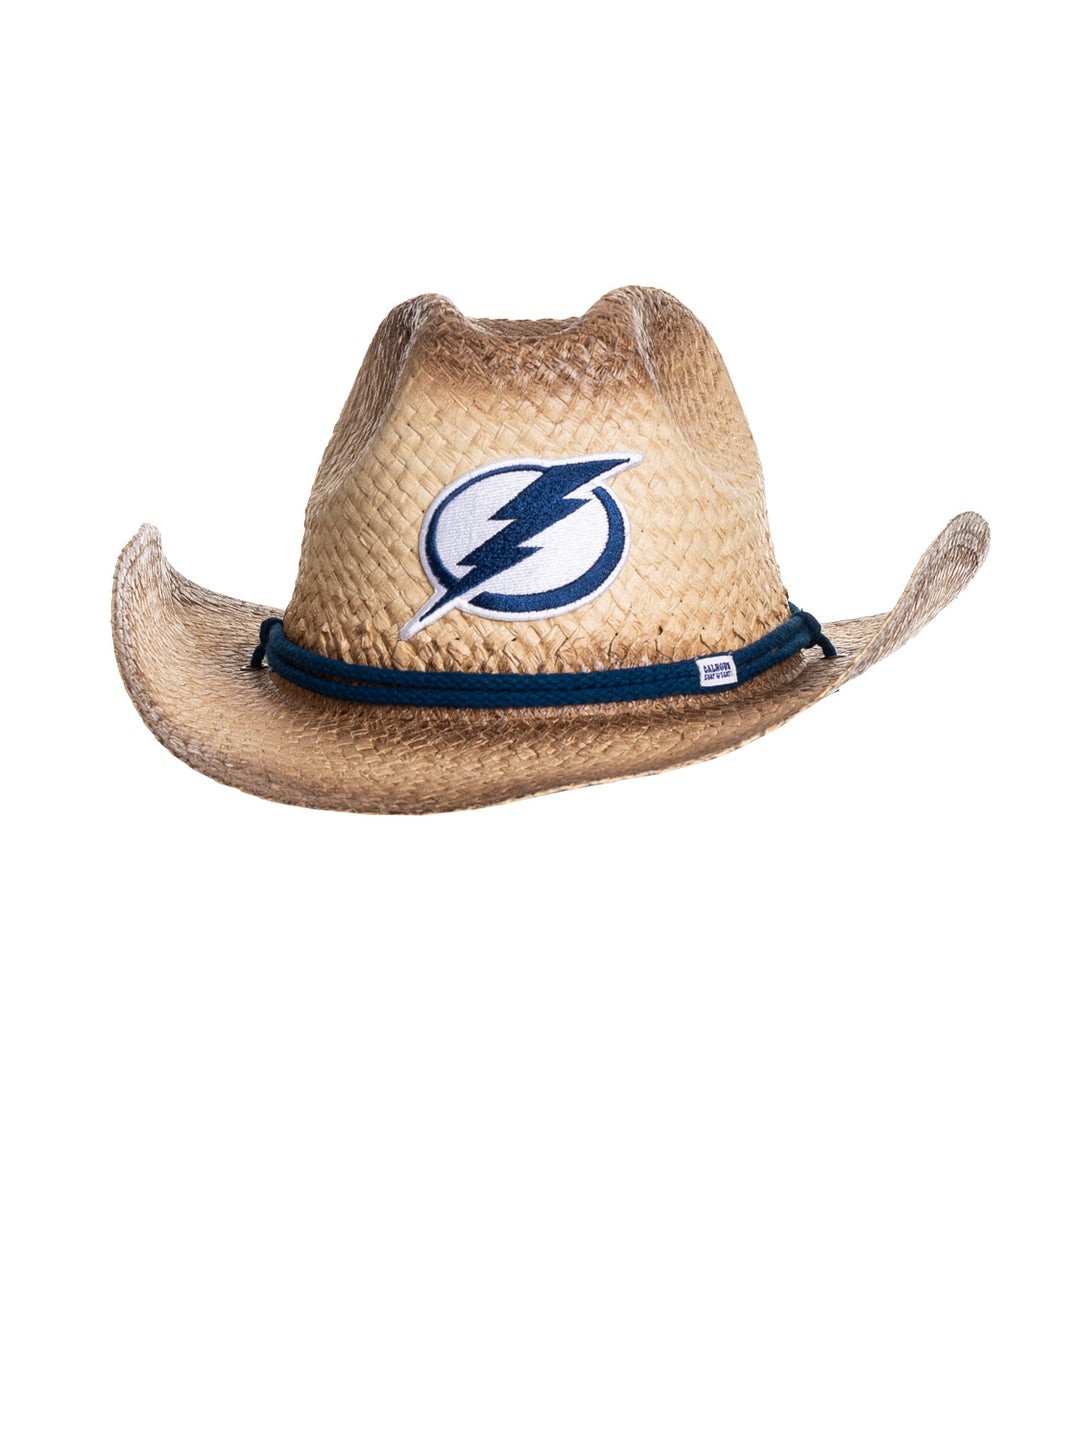 Officially Licensed NHL Tampa Bay Lightning Cowboy Hat